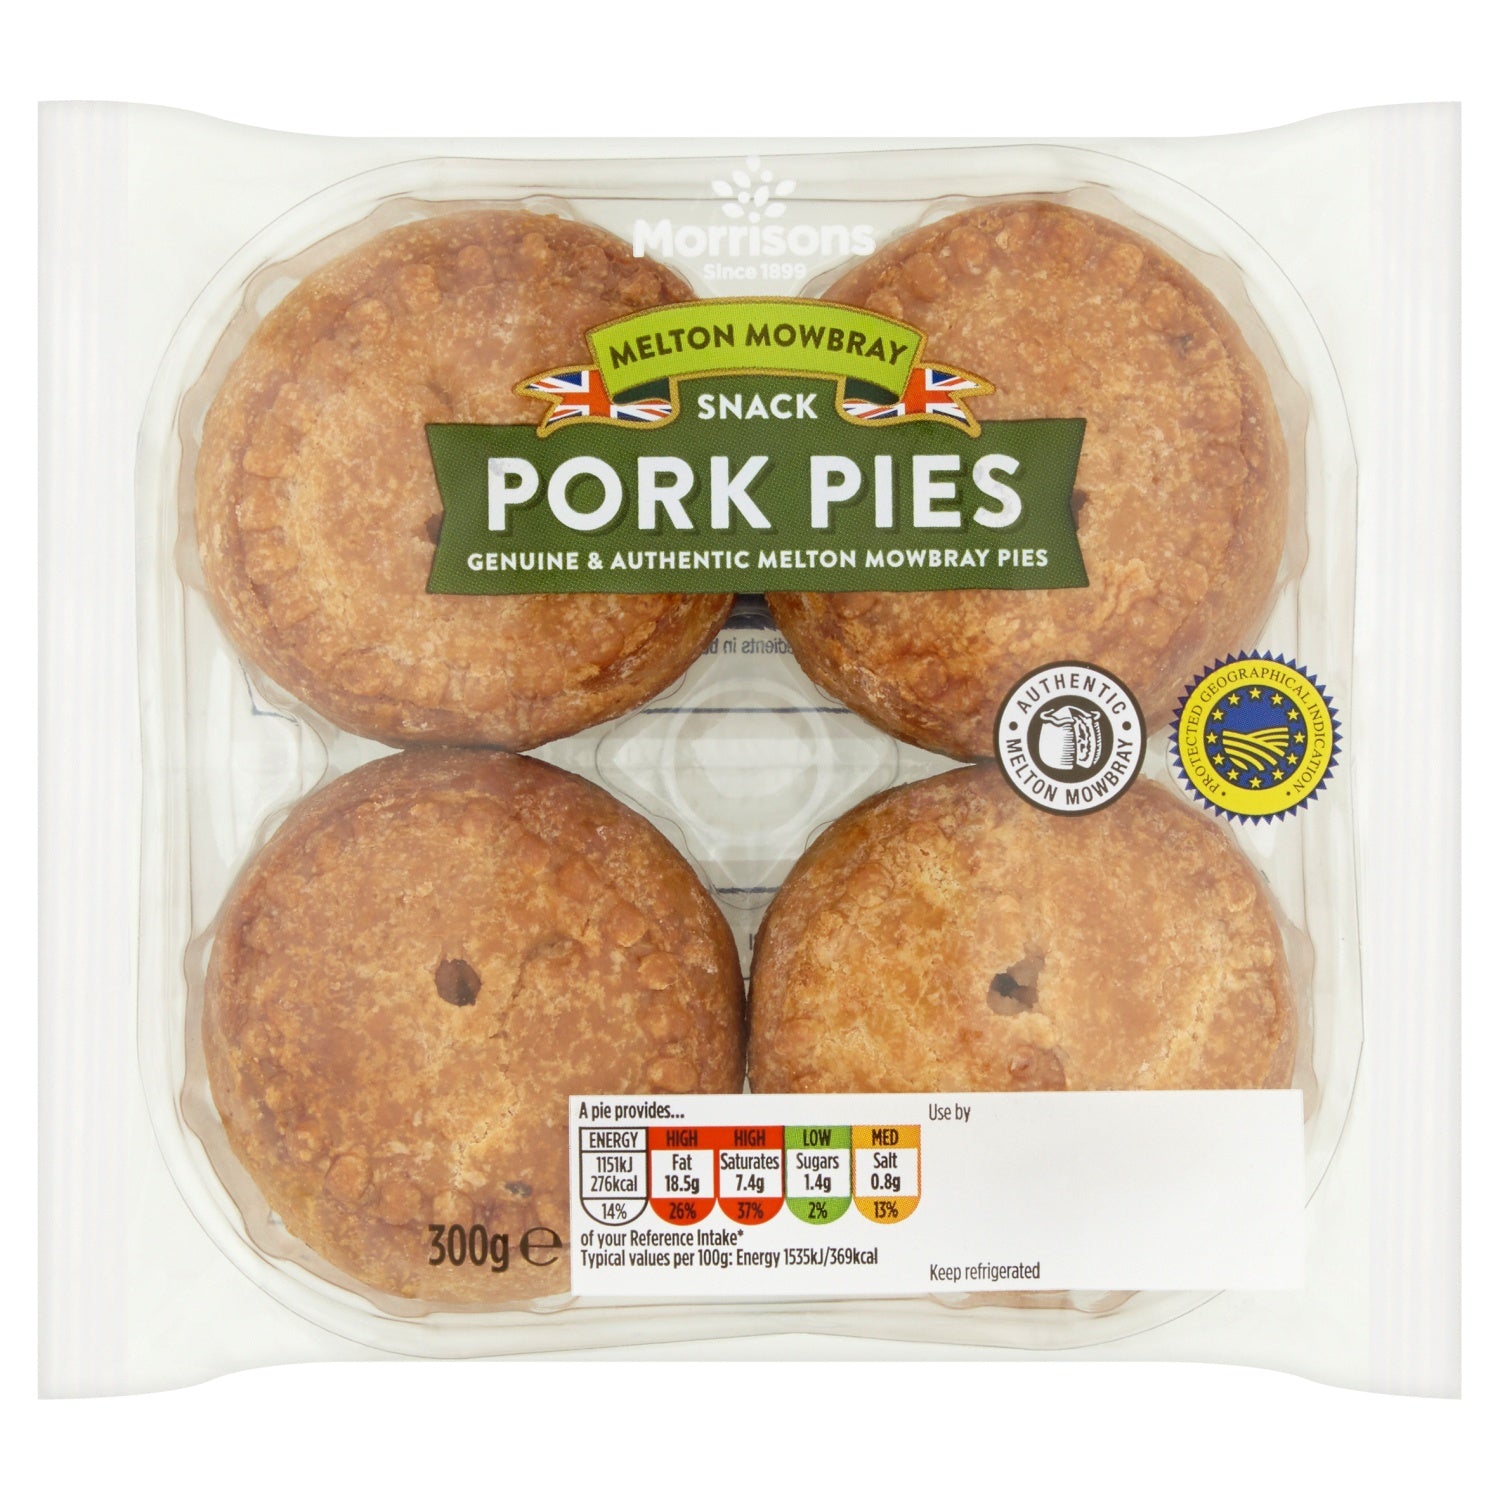 Morrisons Melton Mowbray Snack Pork Pies 4X75g